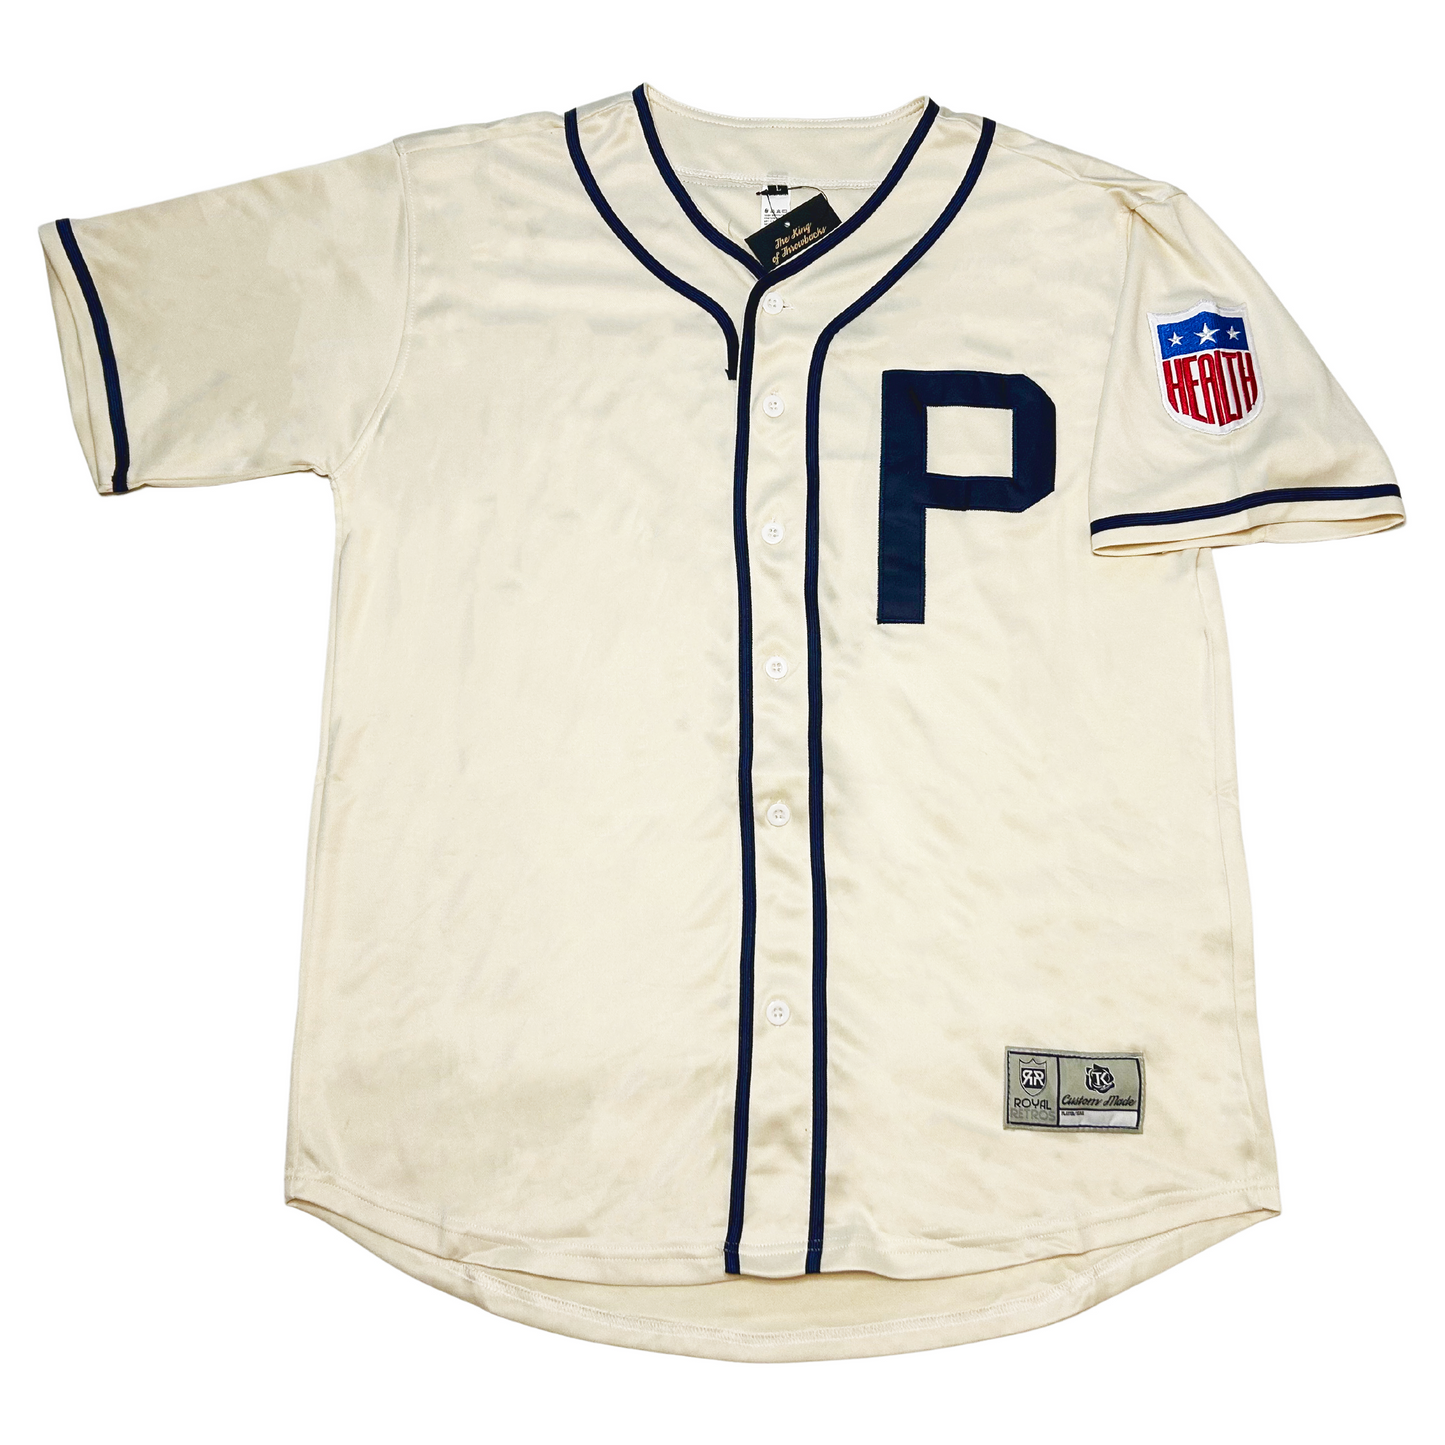 Classic P Baseball Jersey - Cream/Pinstripes - Medium - Royal Retros